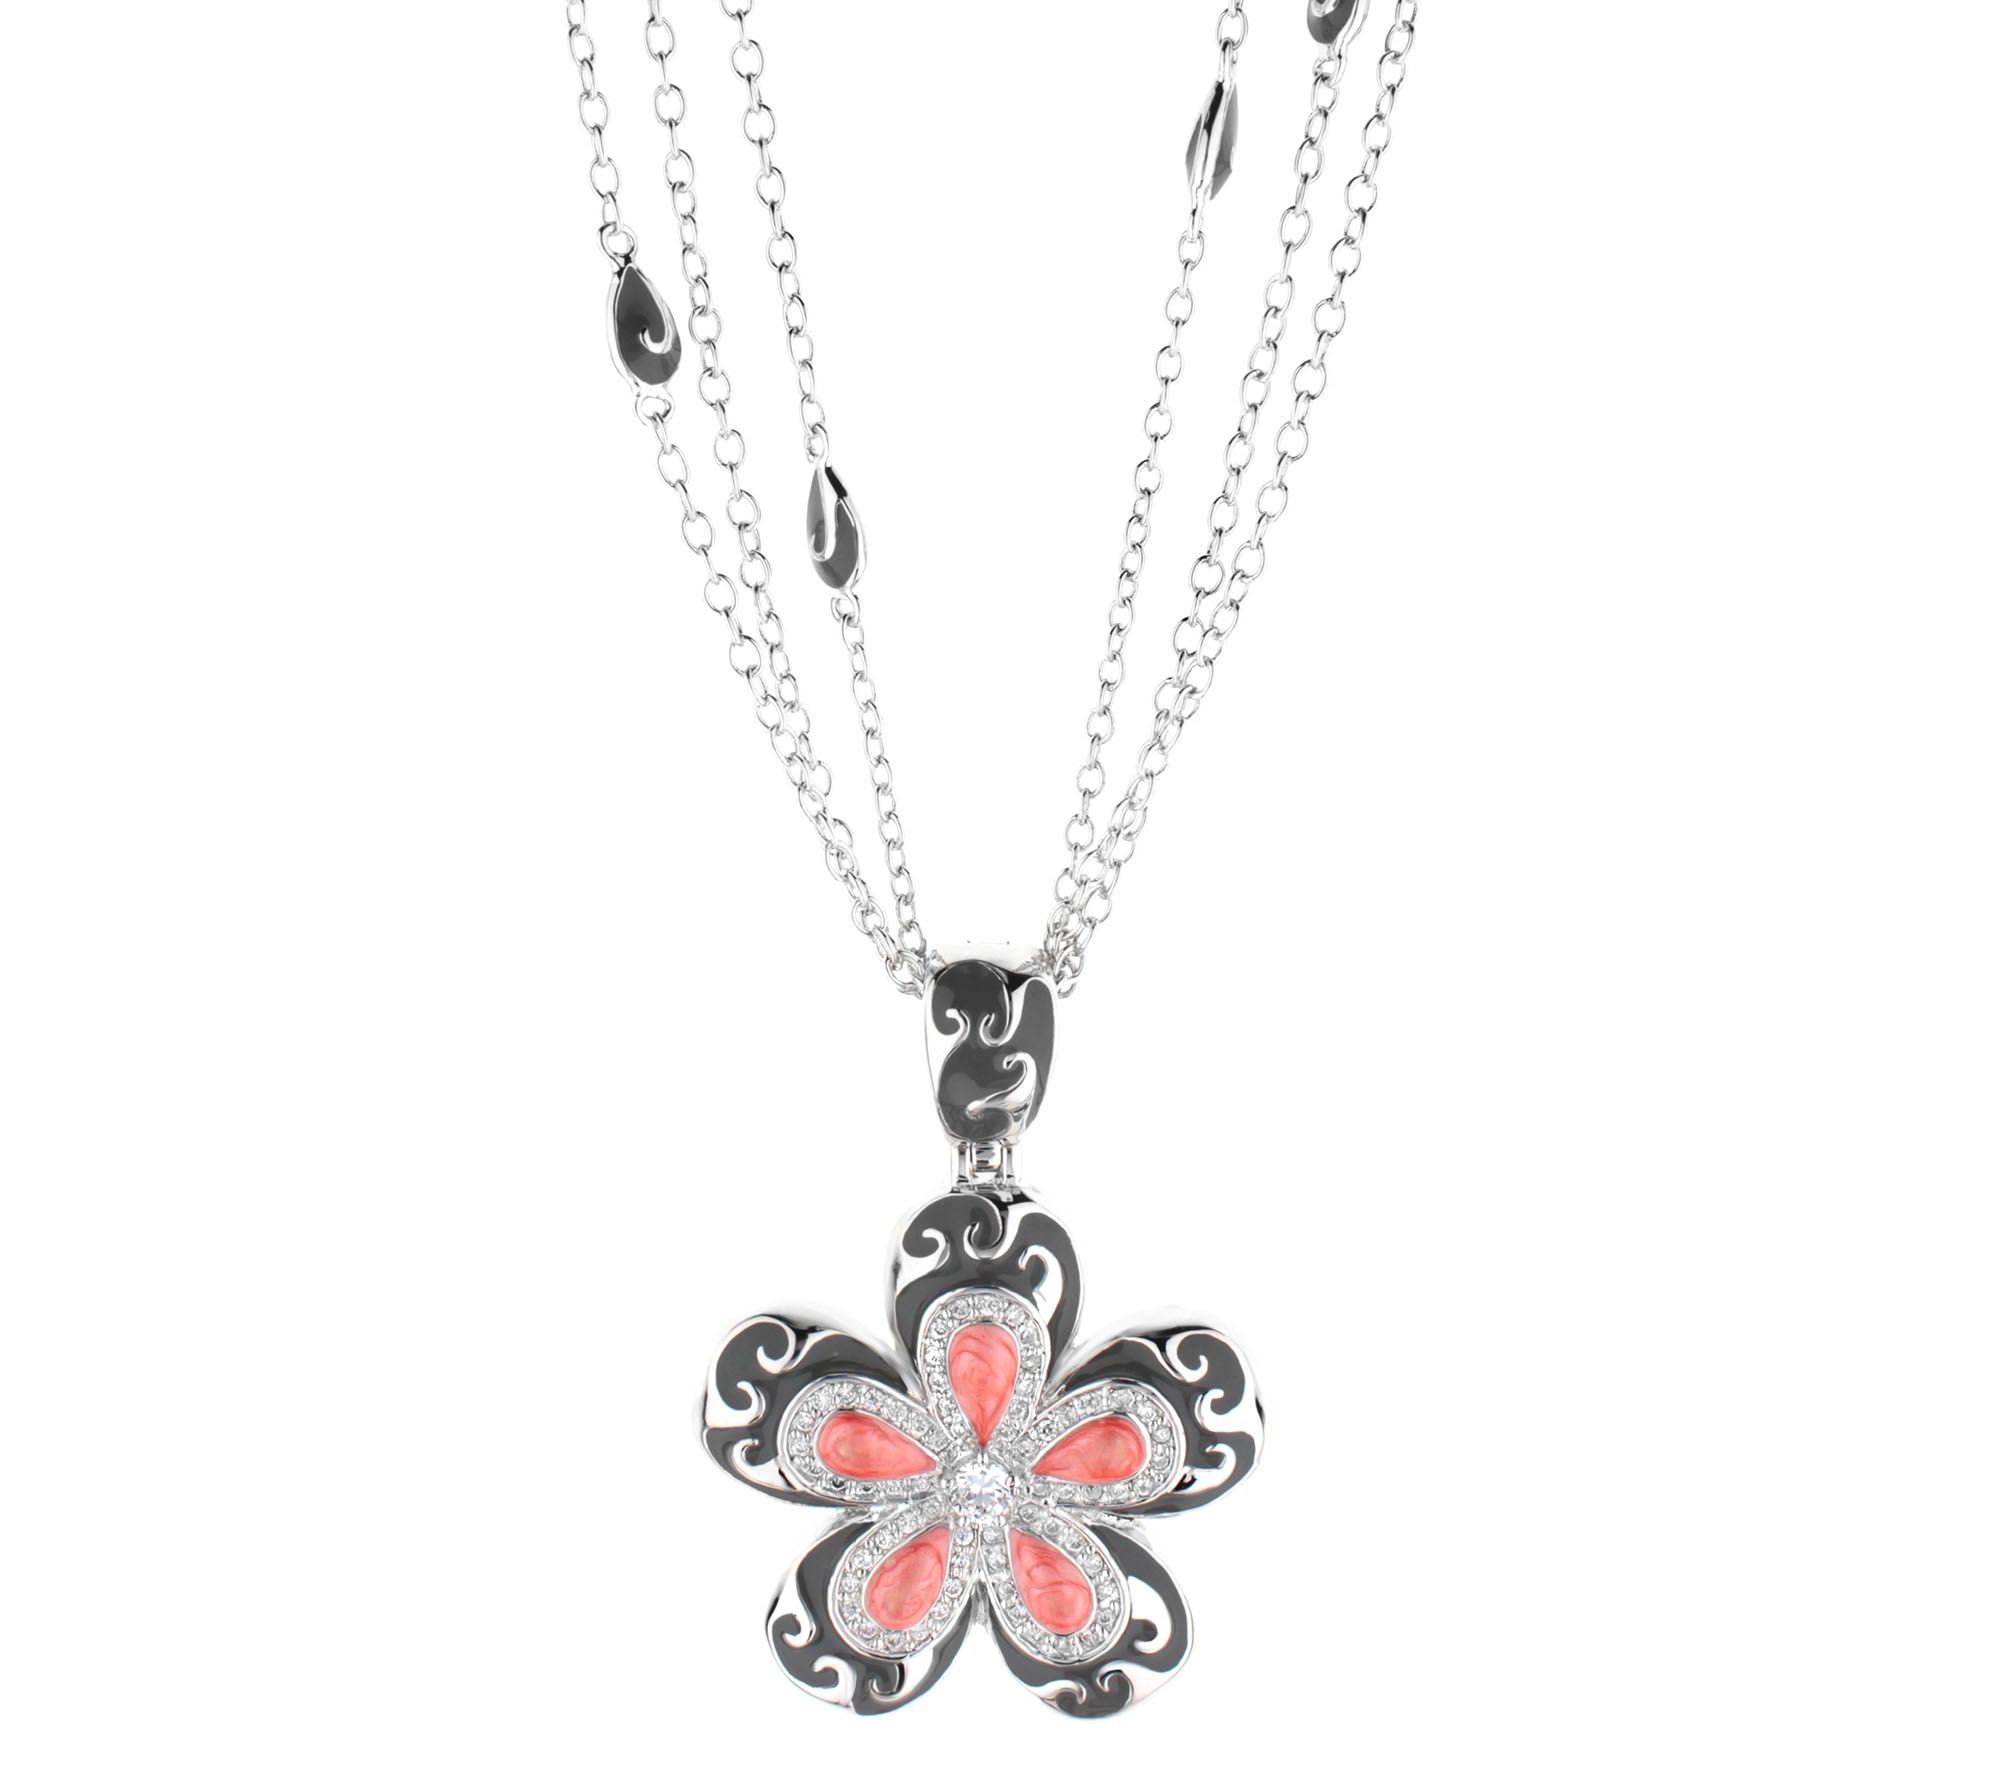 Beautiful Blossom Necklace – Lauren G Adams